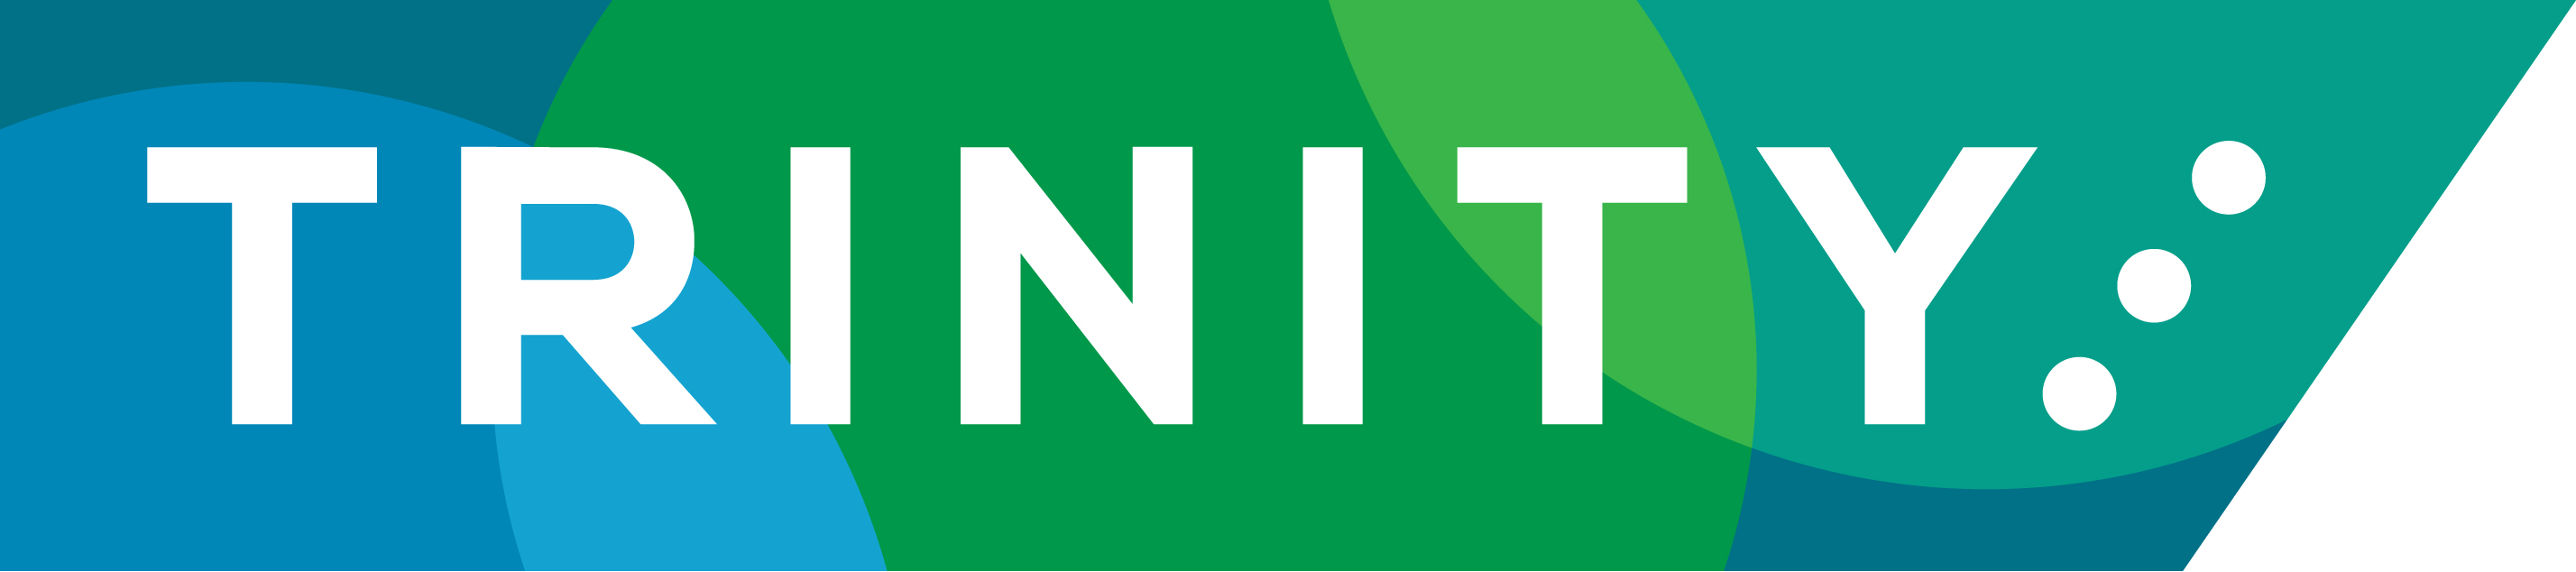 logo for Trinity Community Arts Ltd